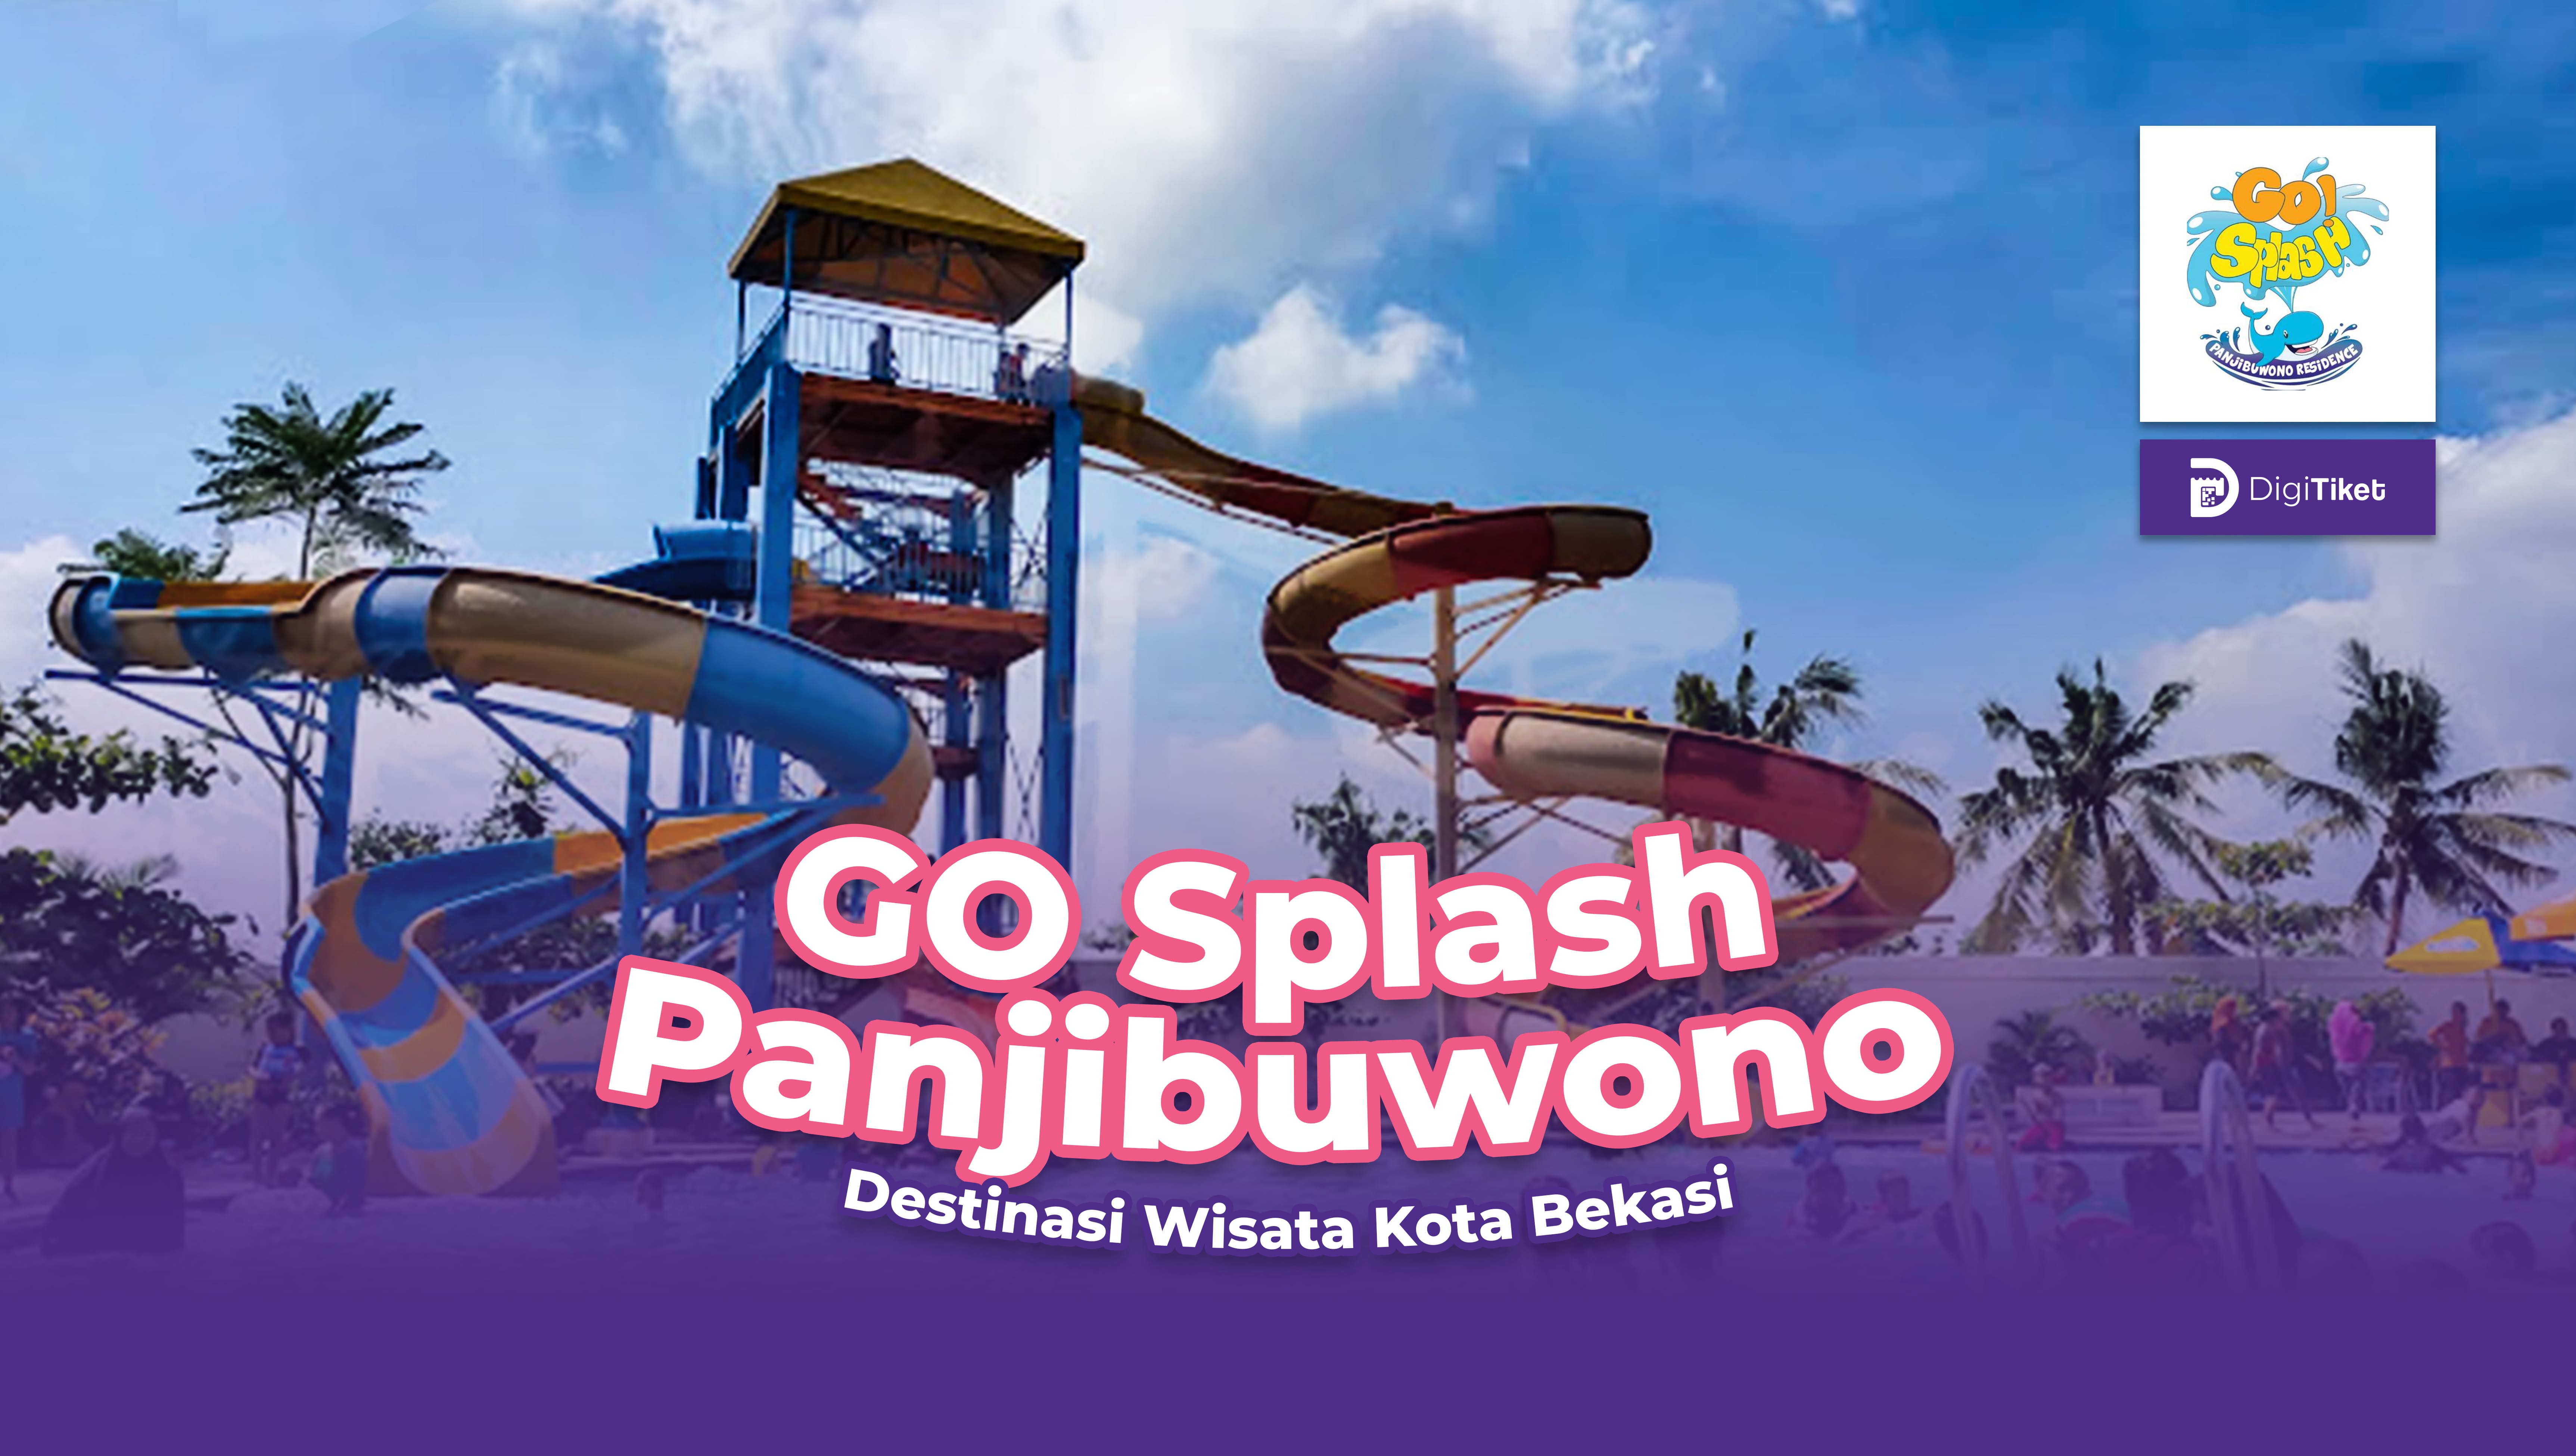 Go Splash Panjibuwono